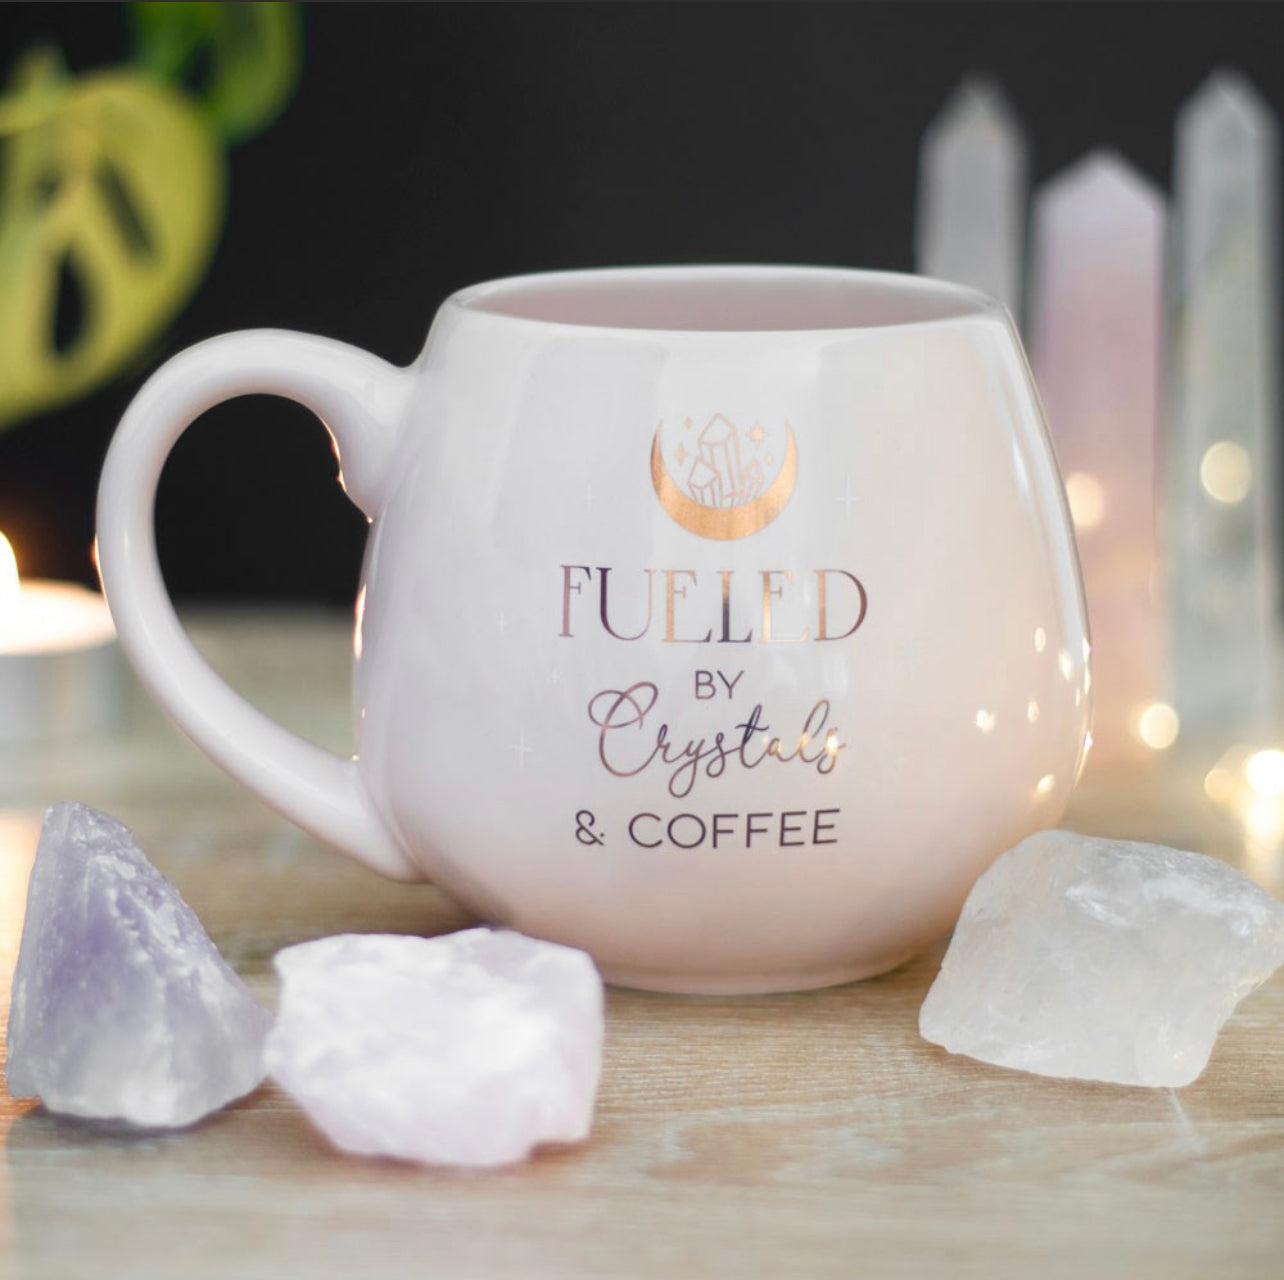 Crystals & Coffee Rounded Mug